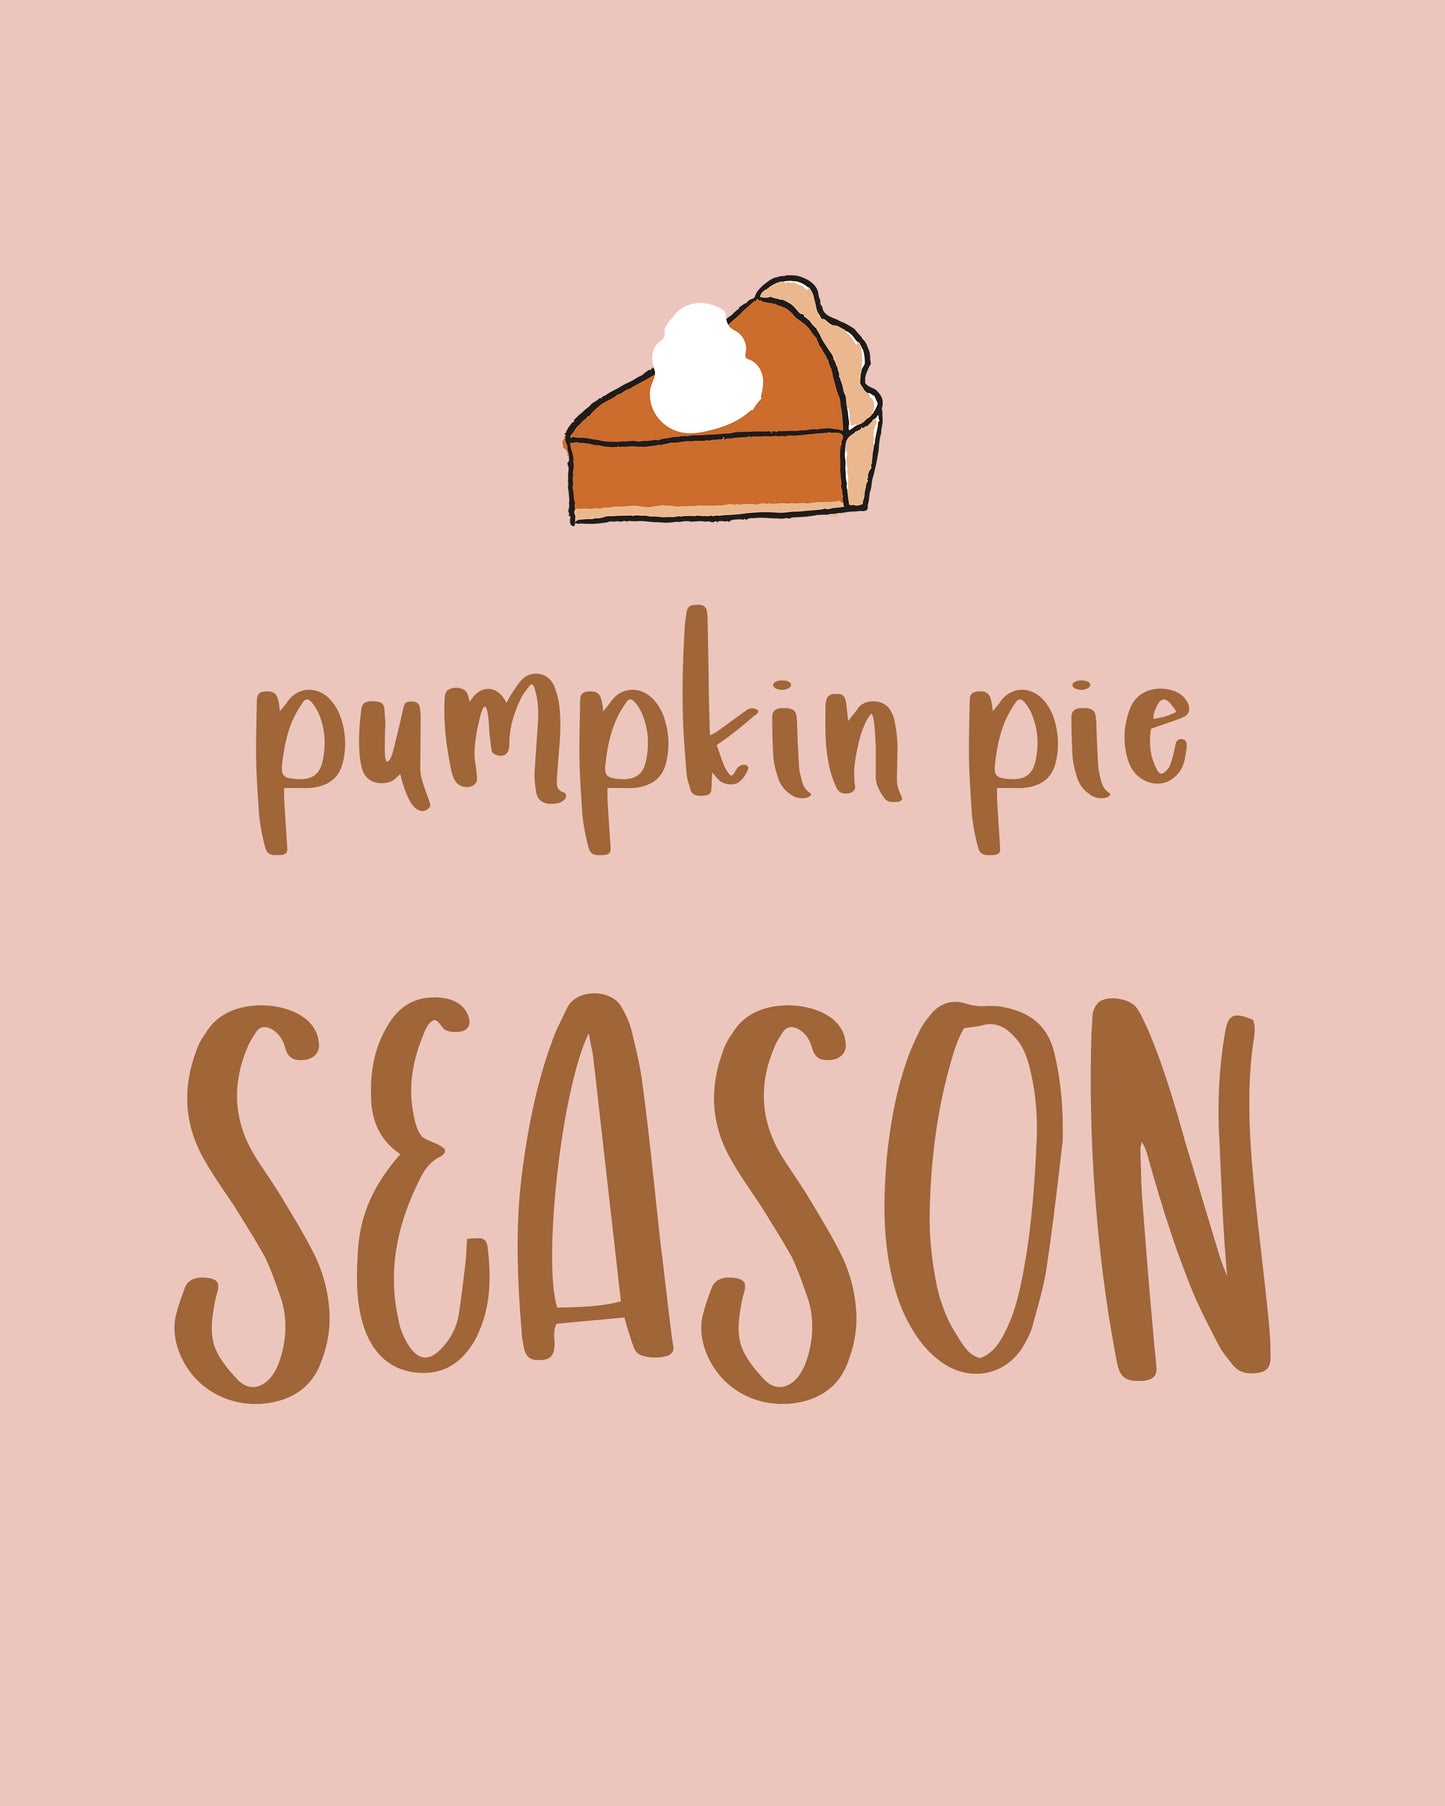 "Pumpkin Pie Season" Printable Artwork